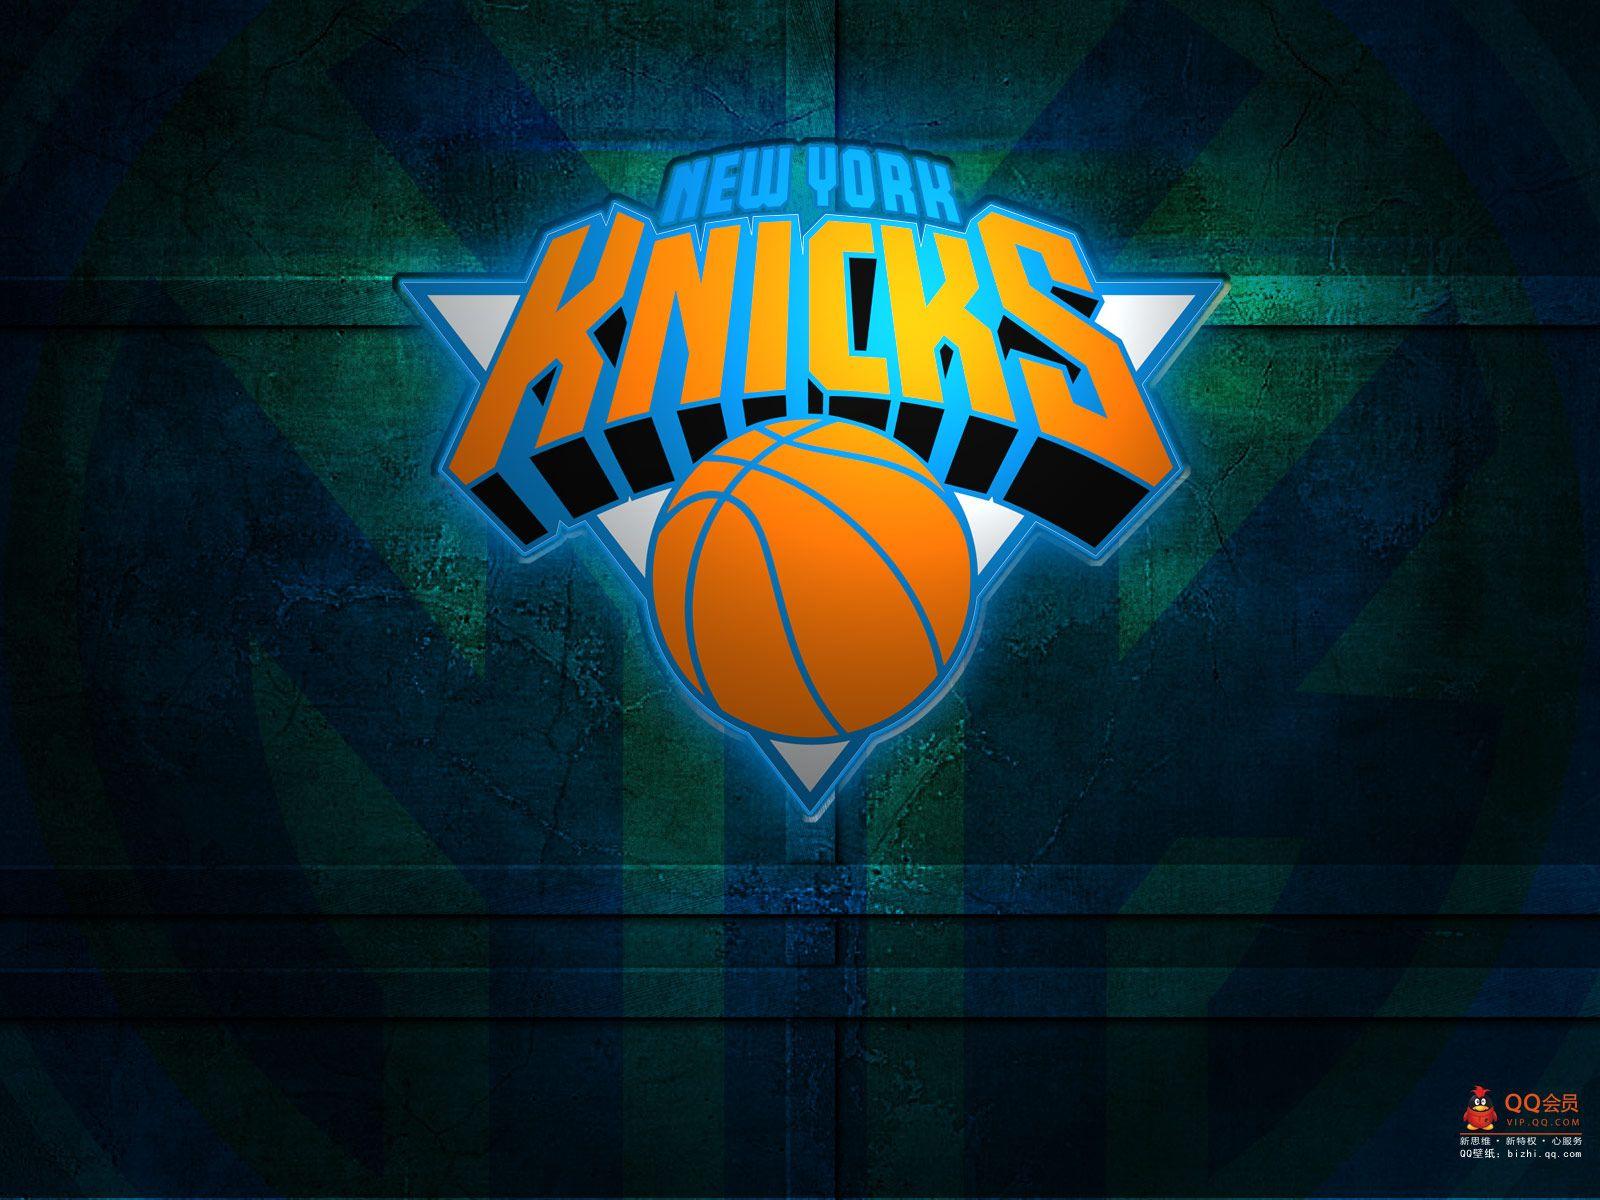 New York Knicks wallpaper by ElnazTajaddod  Download on ZEDGE  6071